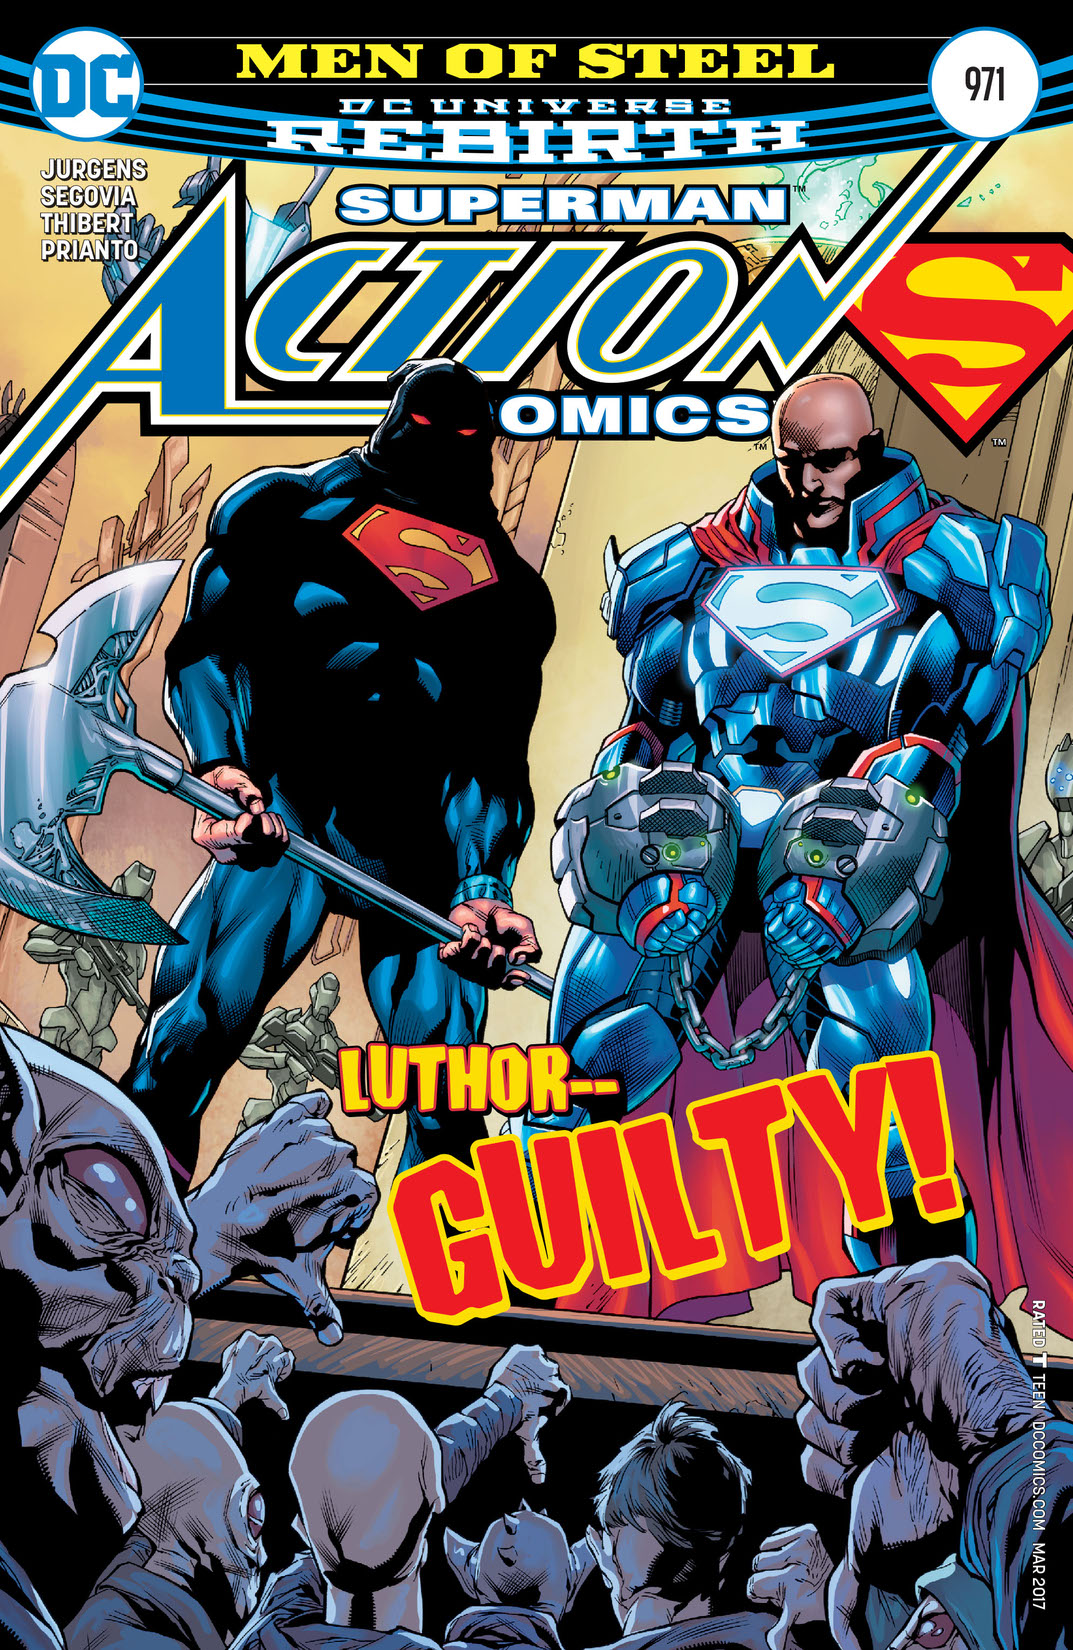 Action Comics (2016-) #971 preview images